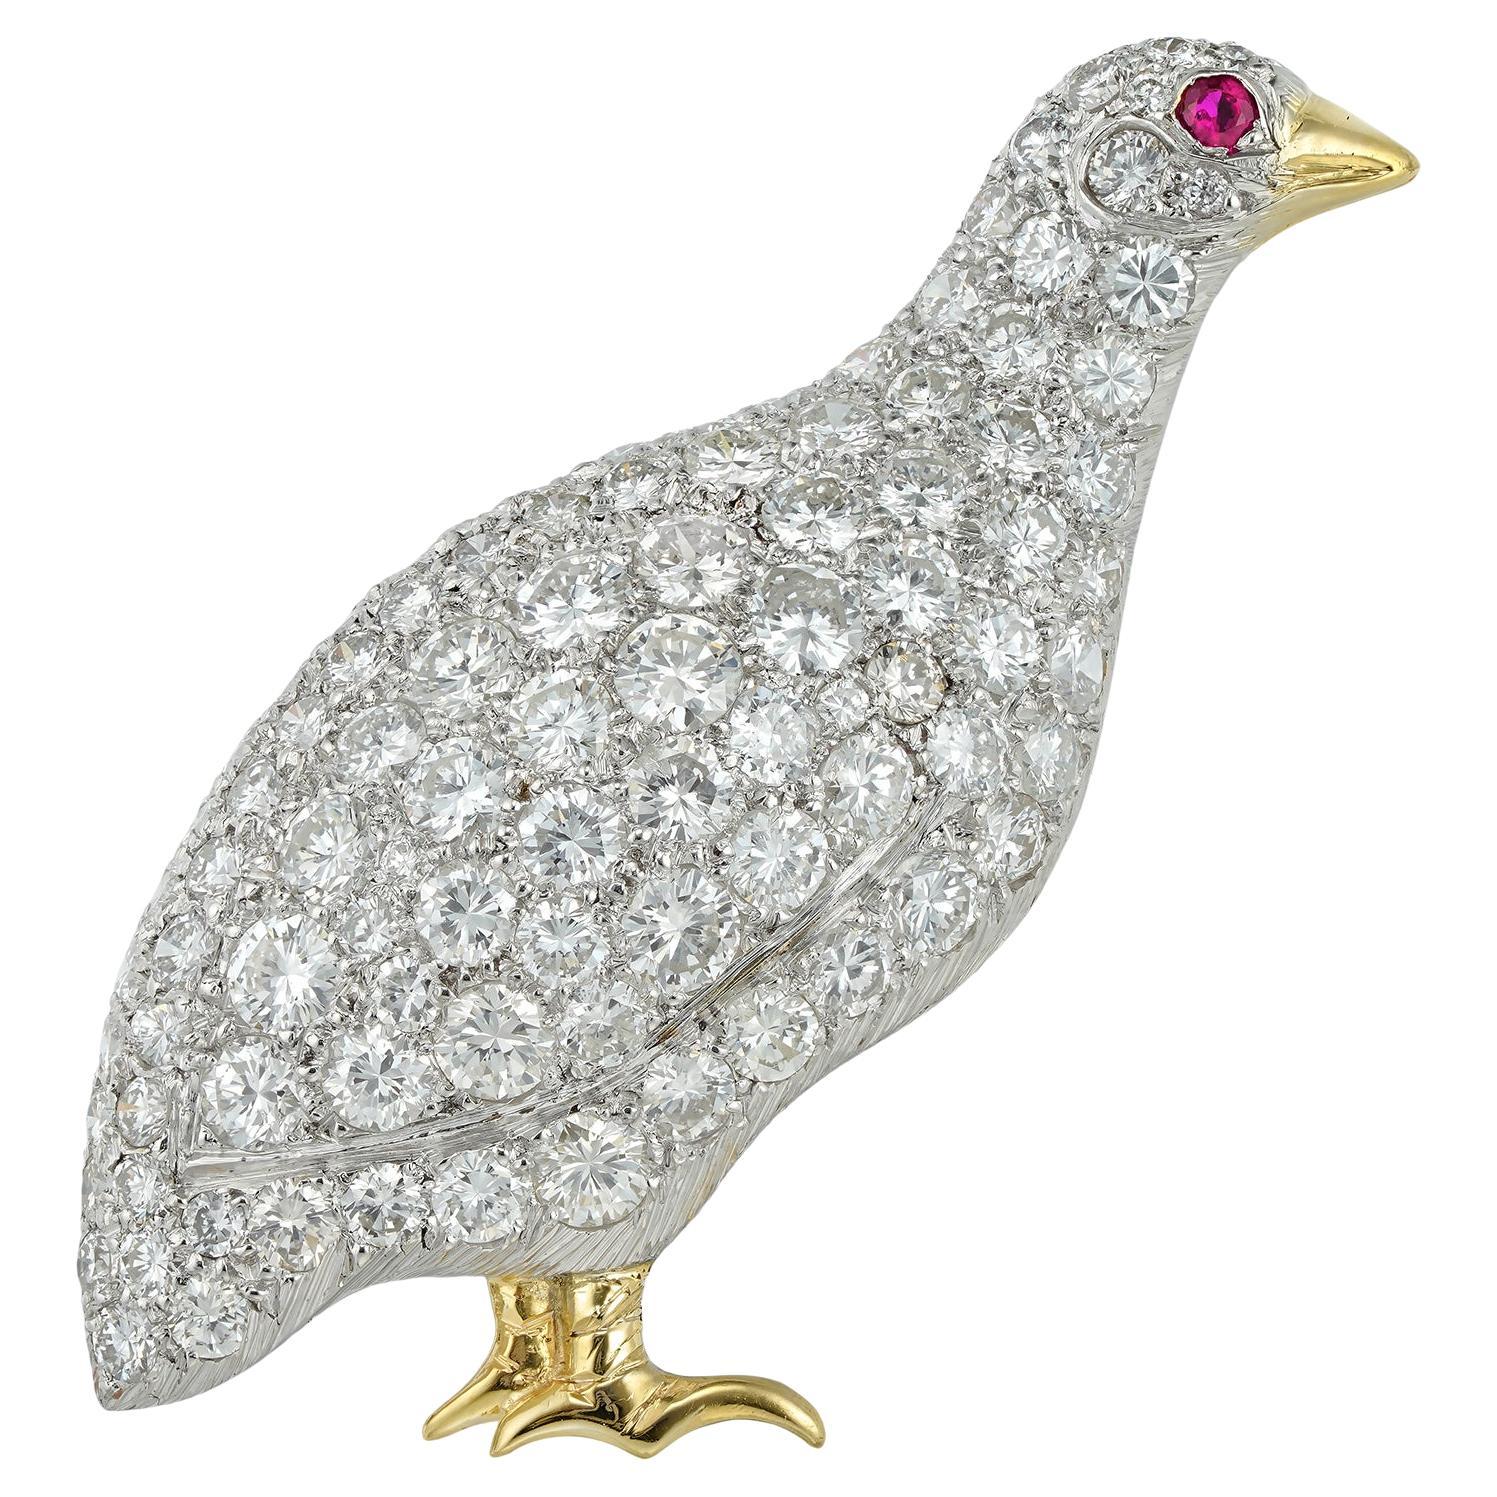 A Diamond-set Partridge Brooch